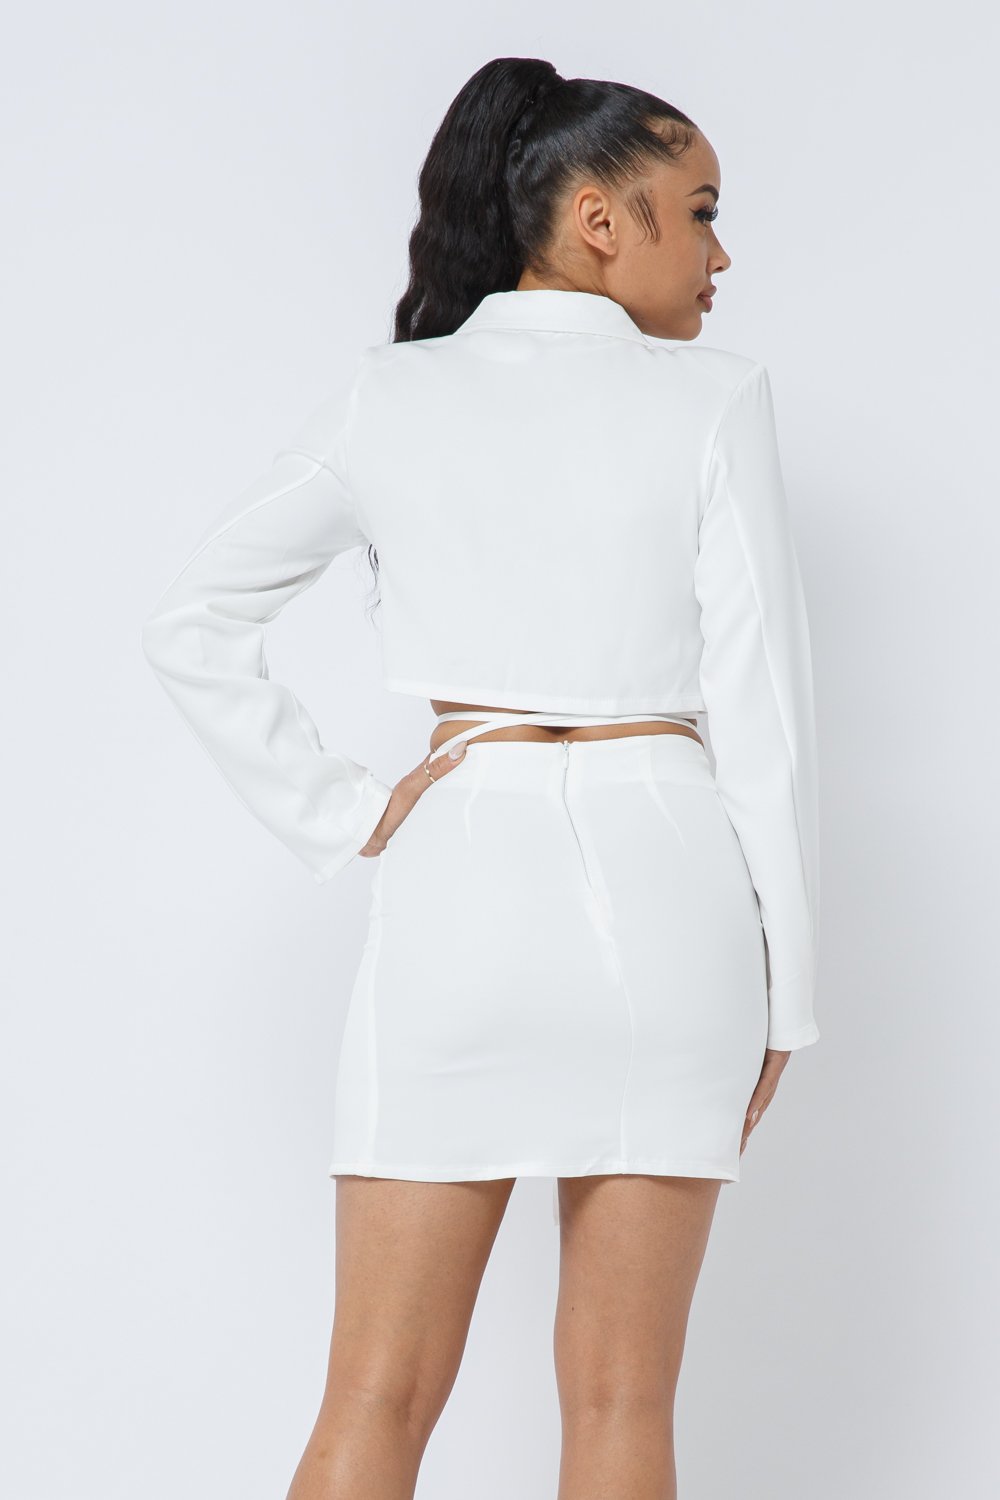 Natalia White Cropped Drawstring Blazer Top and Skirt Set